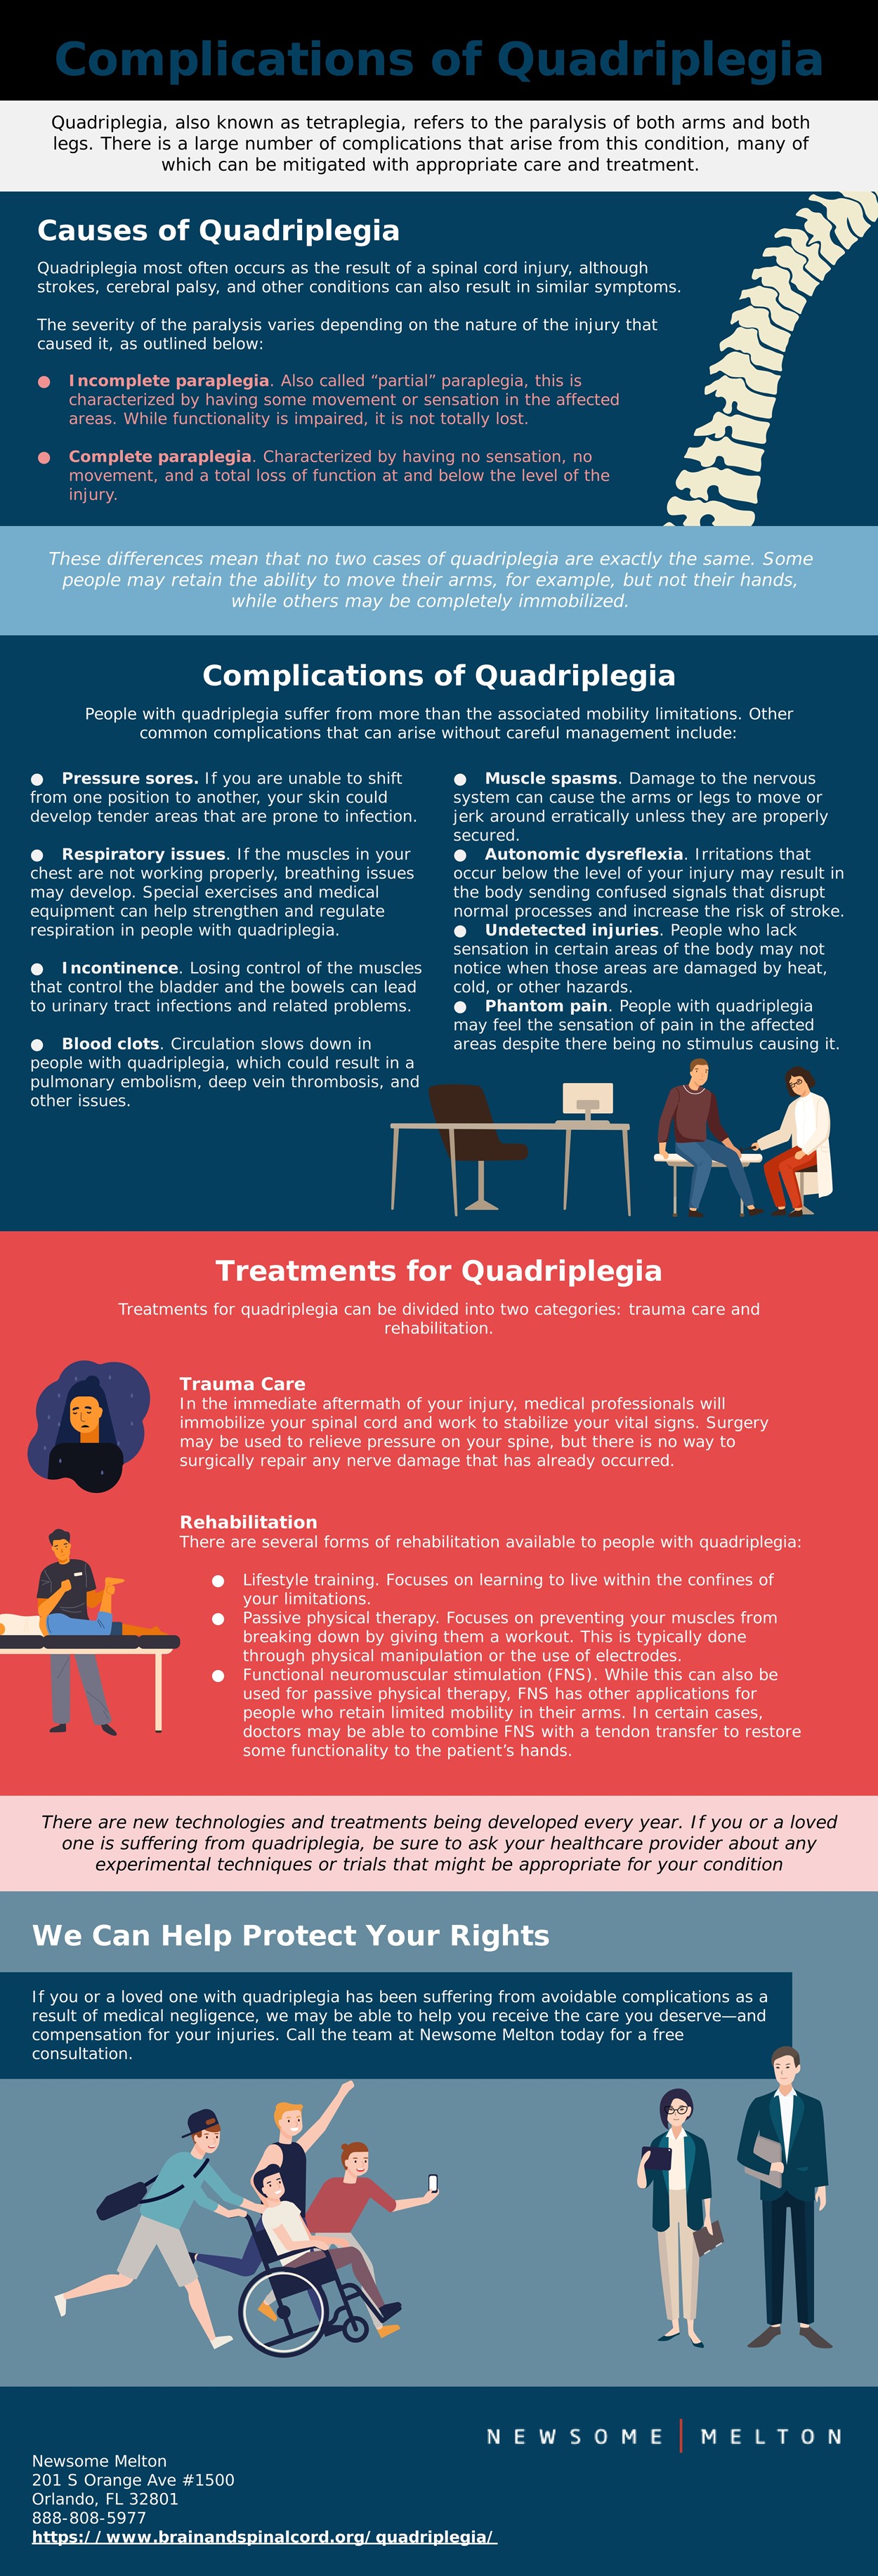 Complications of Quadriplegia